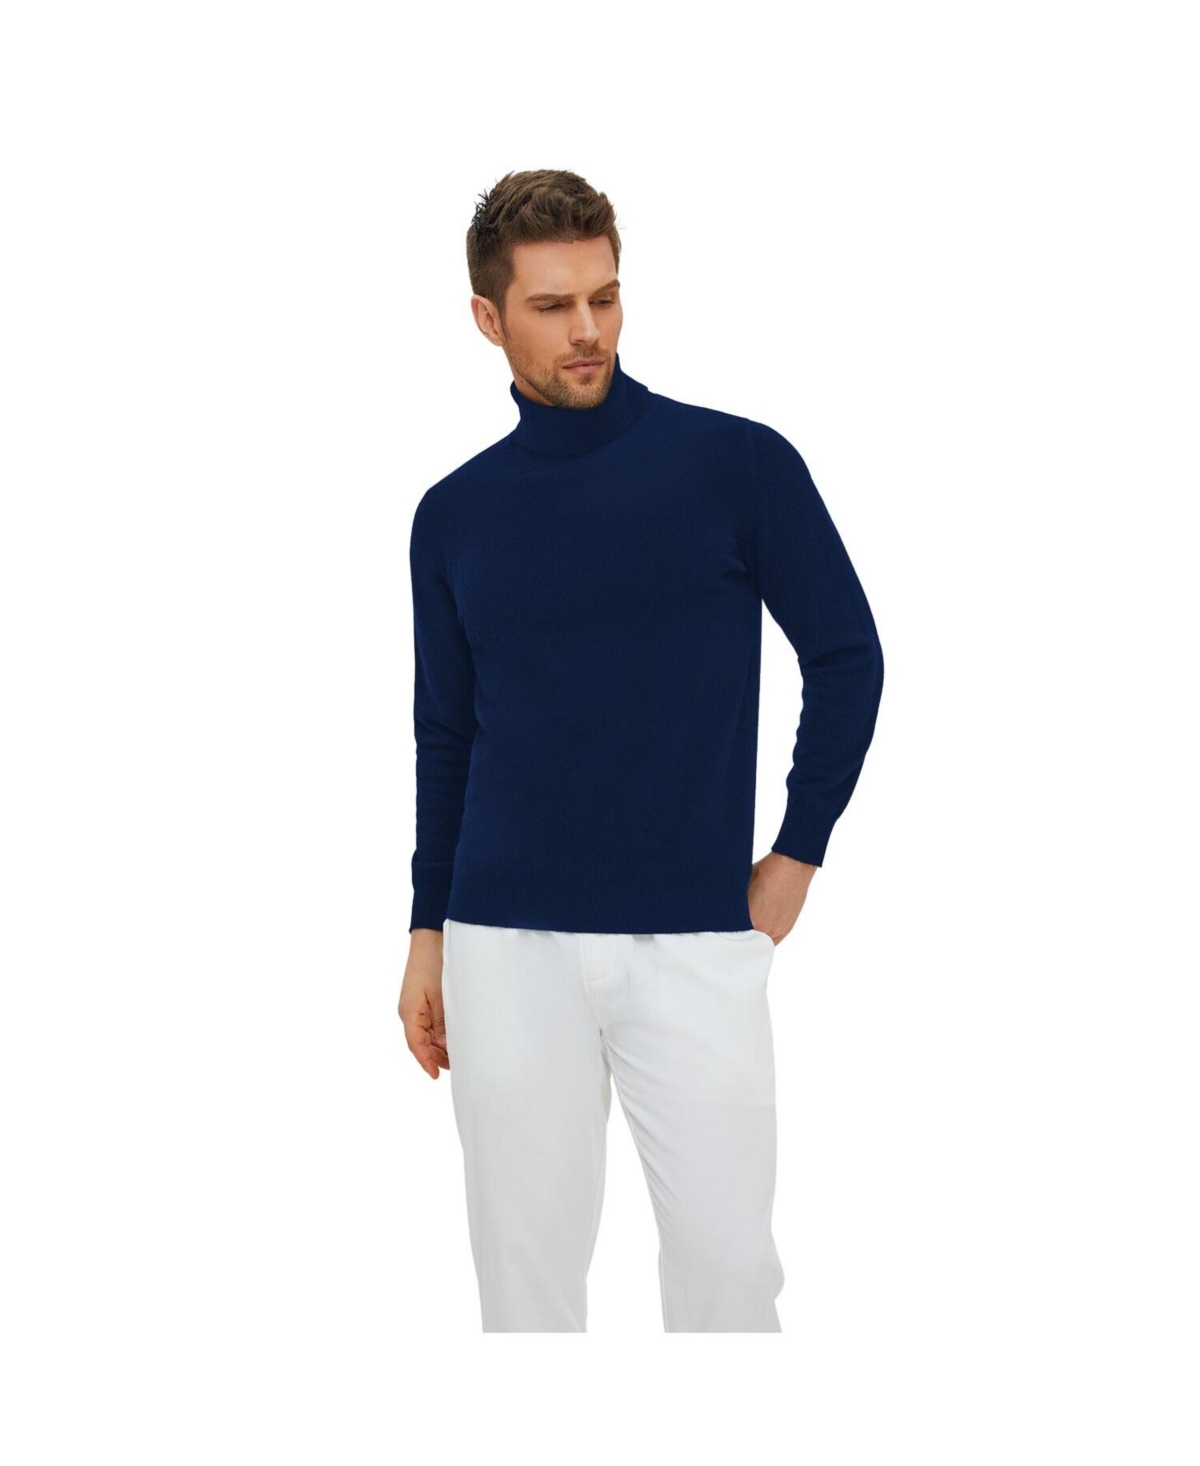 Bellemere Men's Lofty Turtleneck Merino Sweater - Navy blue